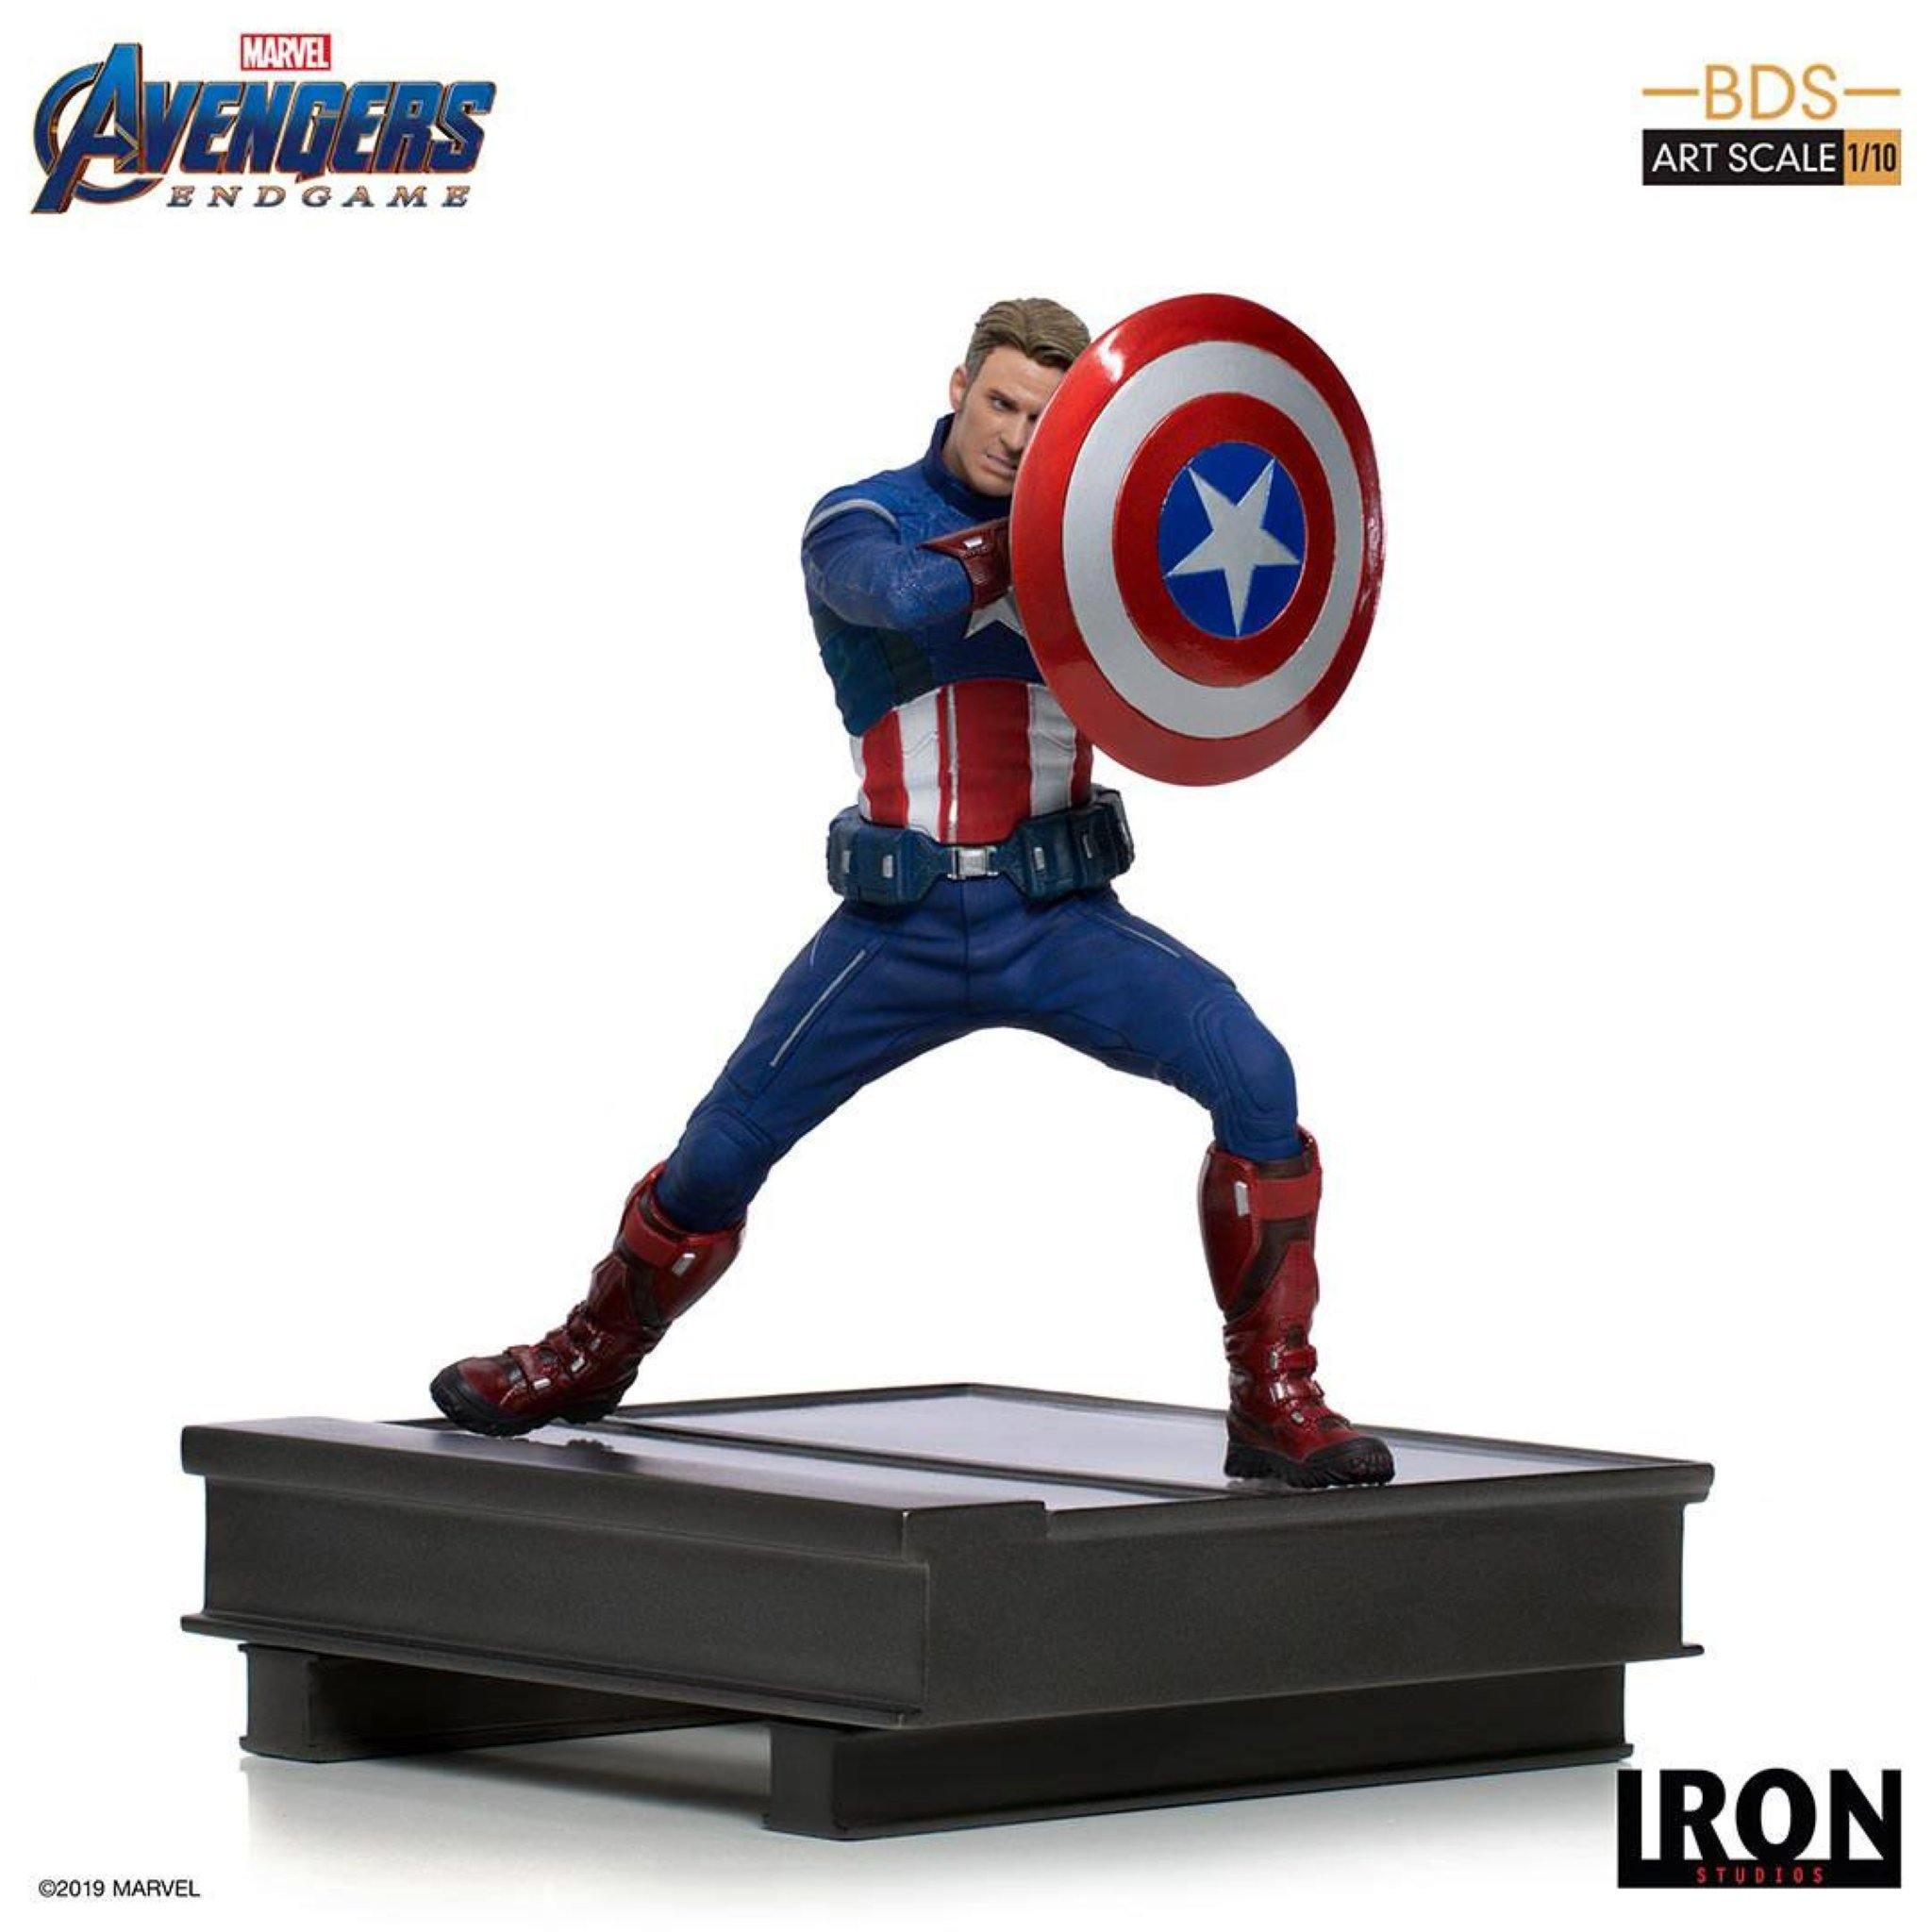 Iron Studios Avengers Endgame BDS Art Scale Statue 1/10 Captain America 2023 - NEXTLEVELUK